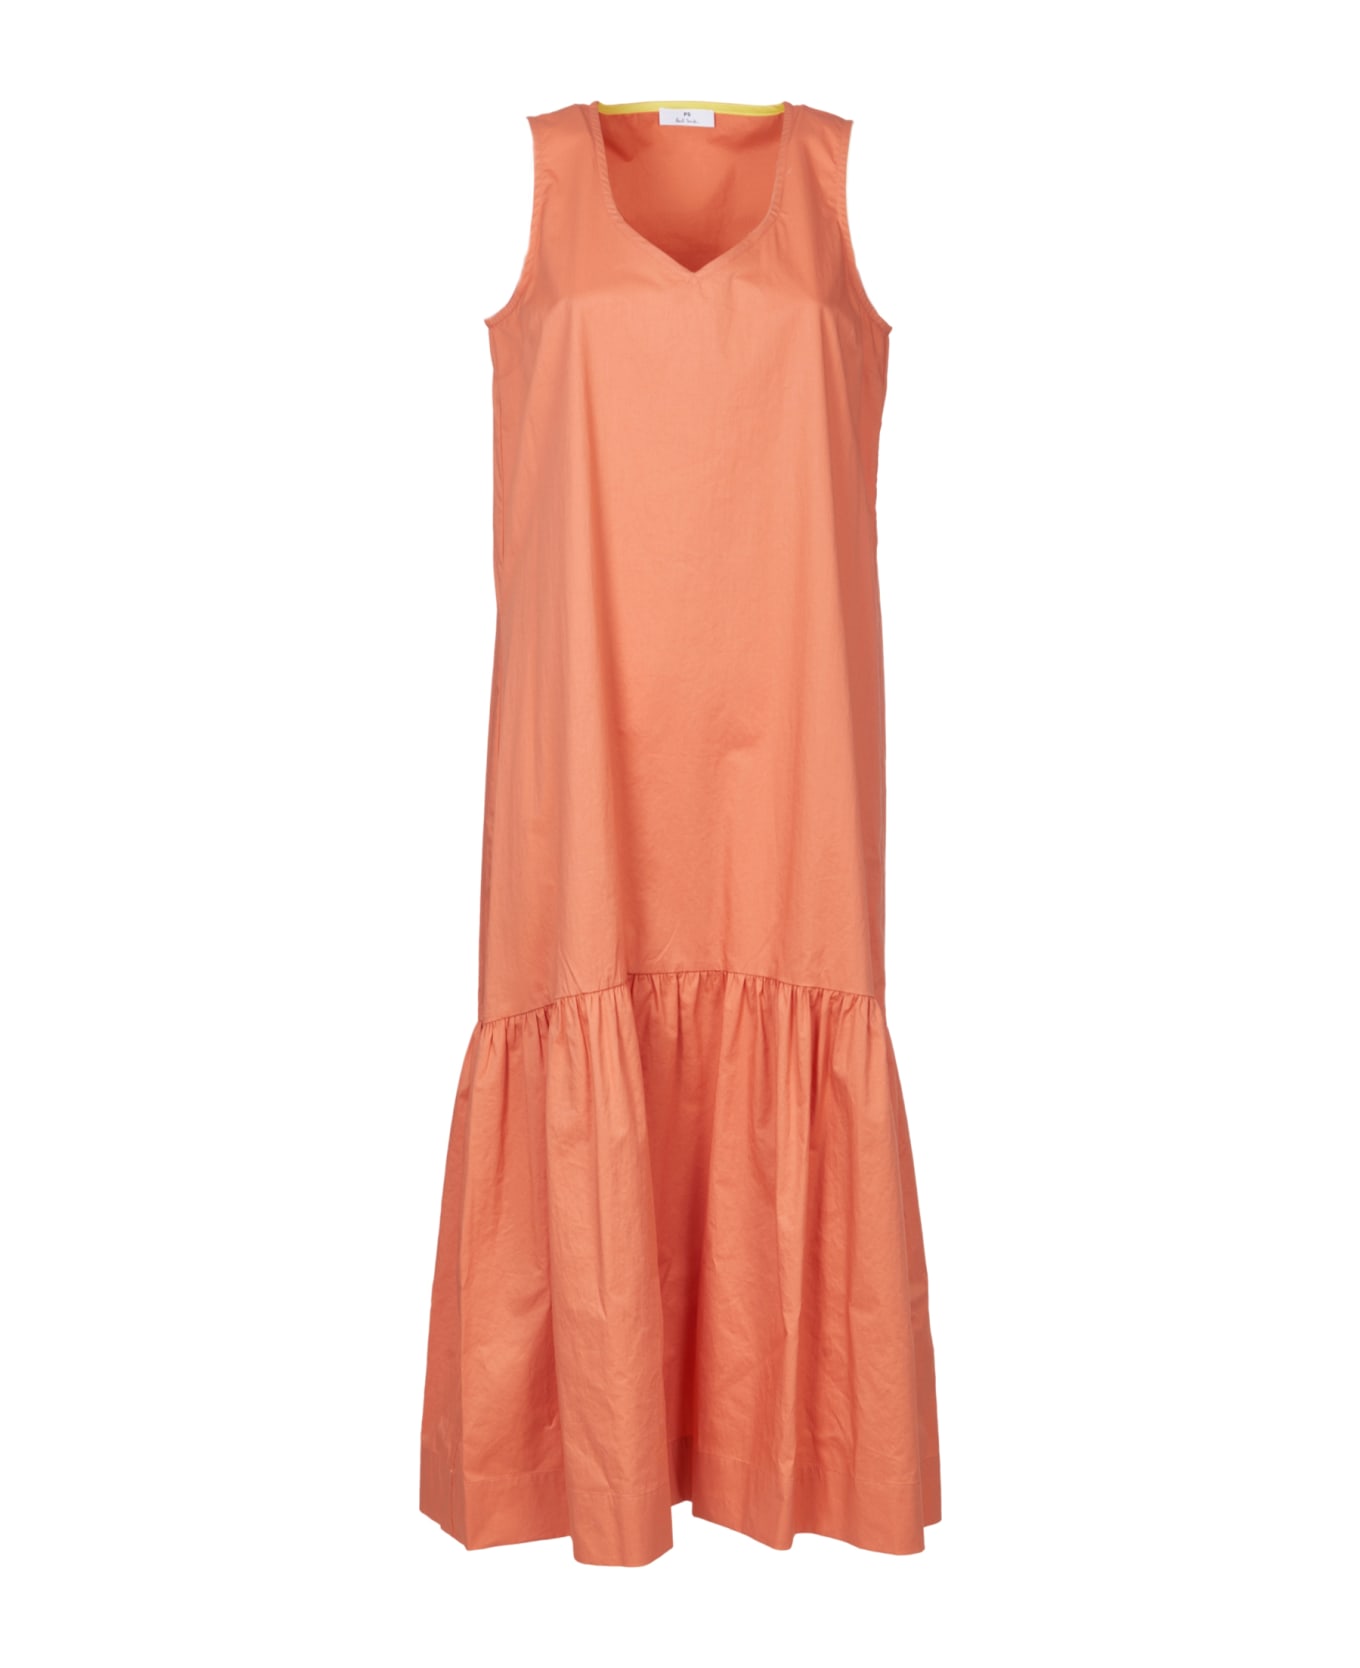 Paul Smith Dress - Orange